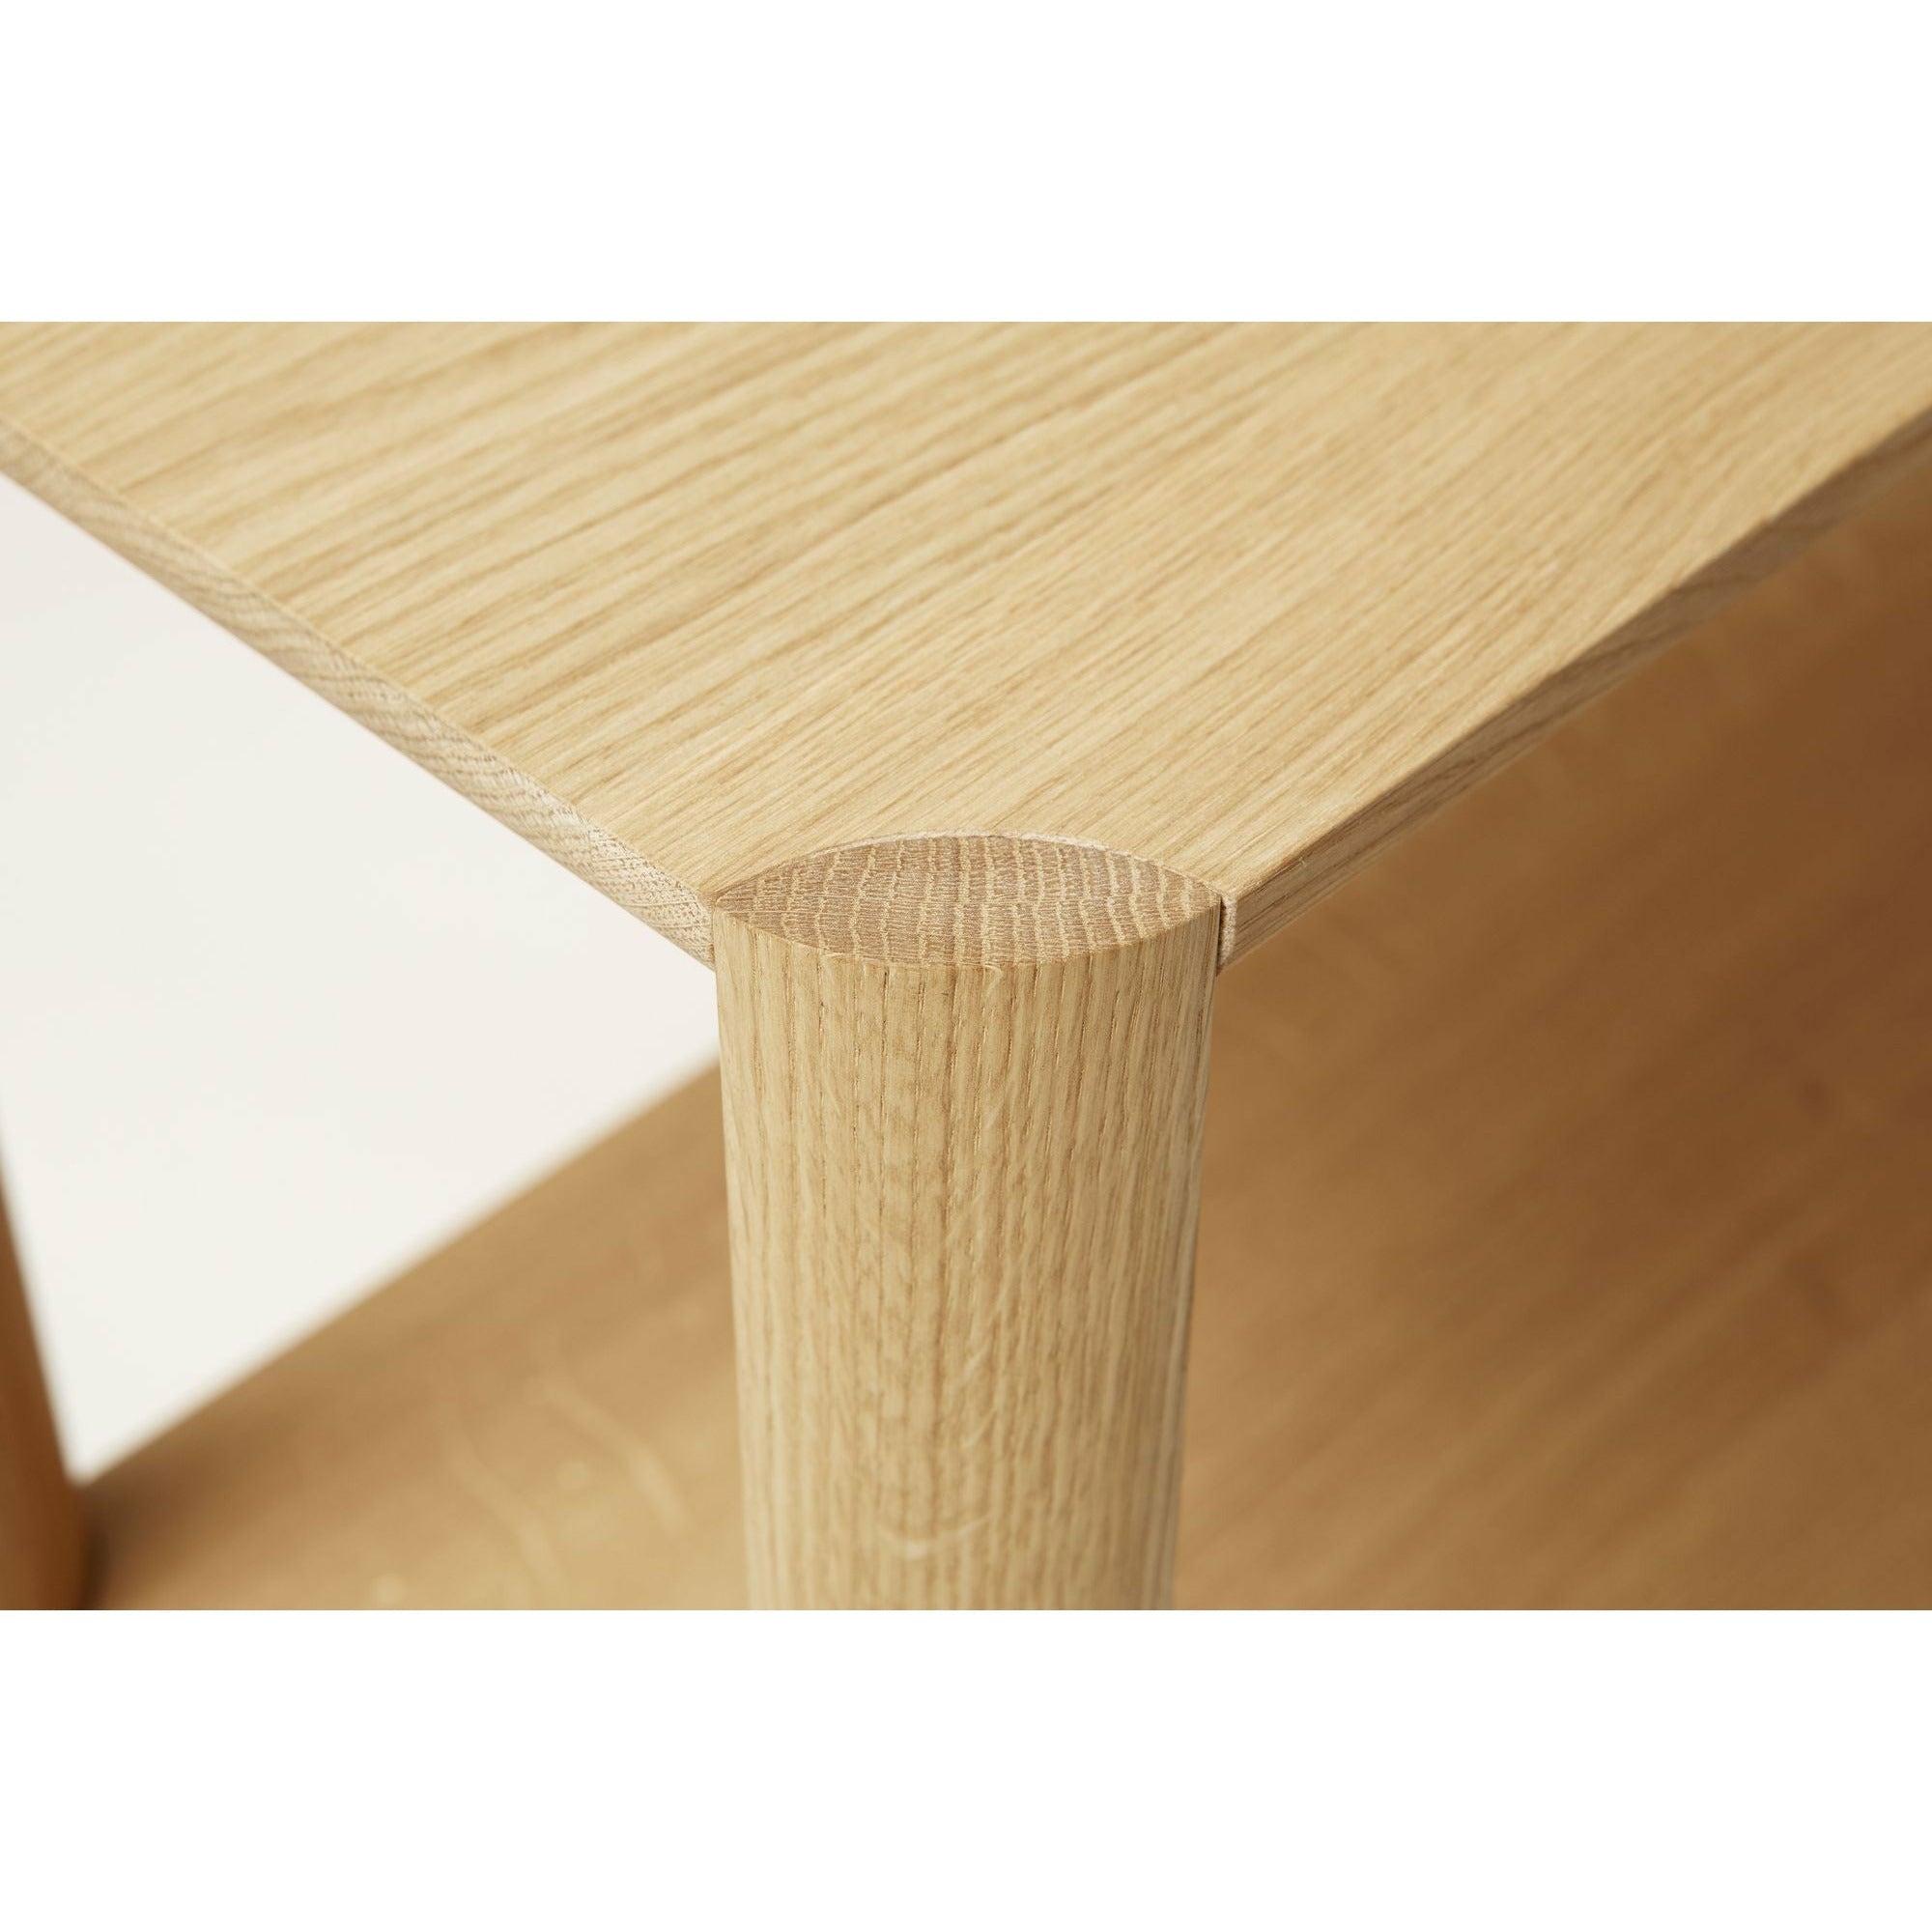 Form & Refine Leaf Shelf 1x2. Oak